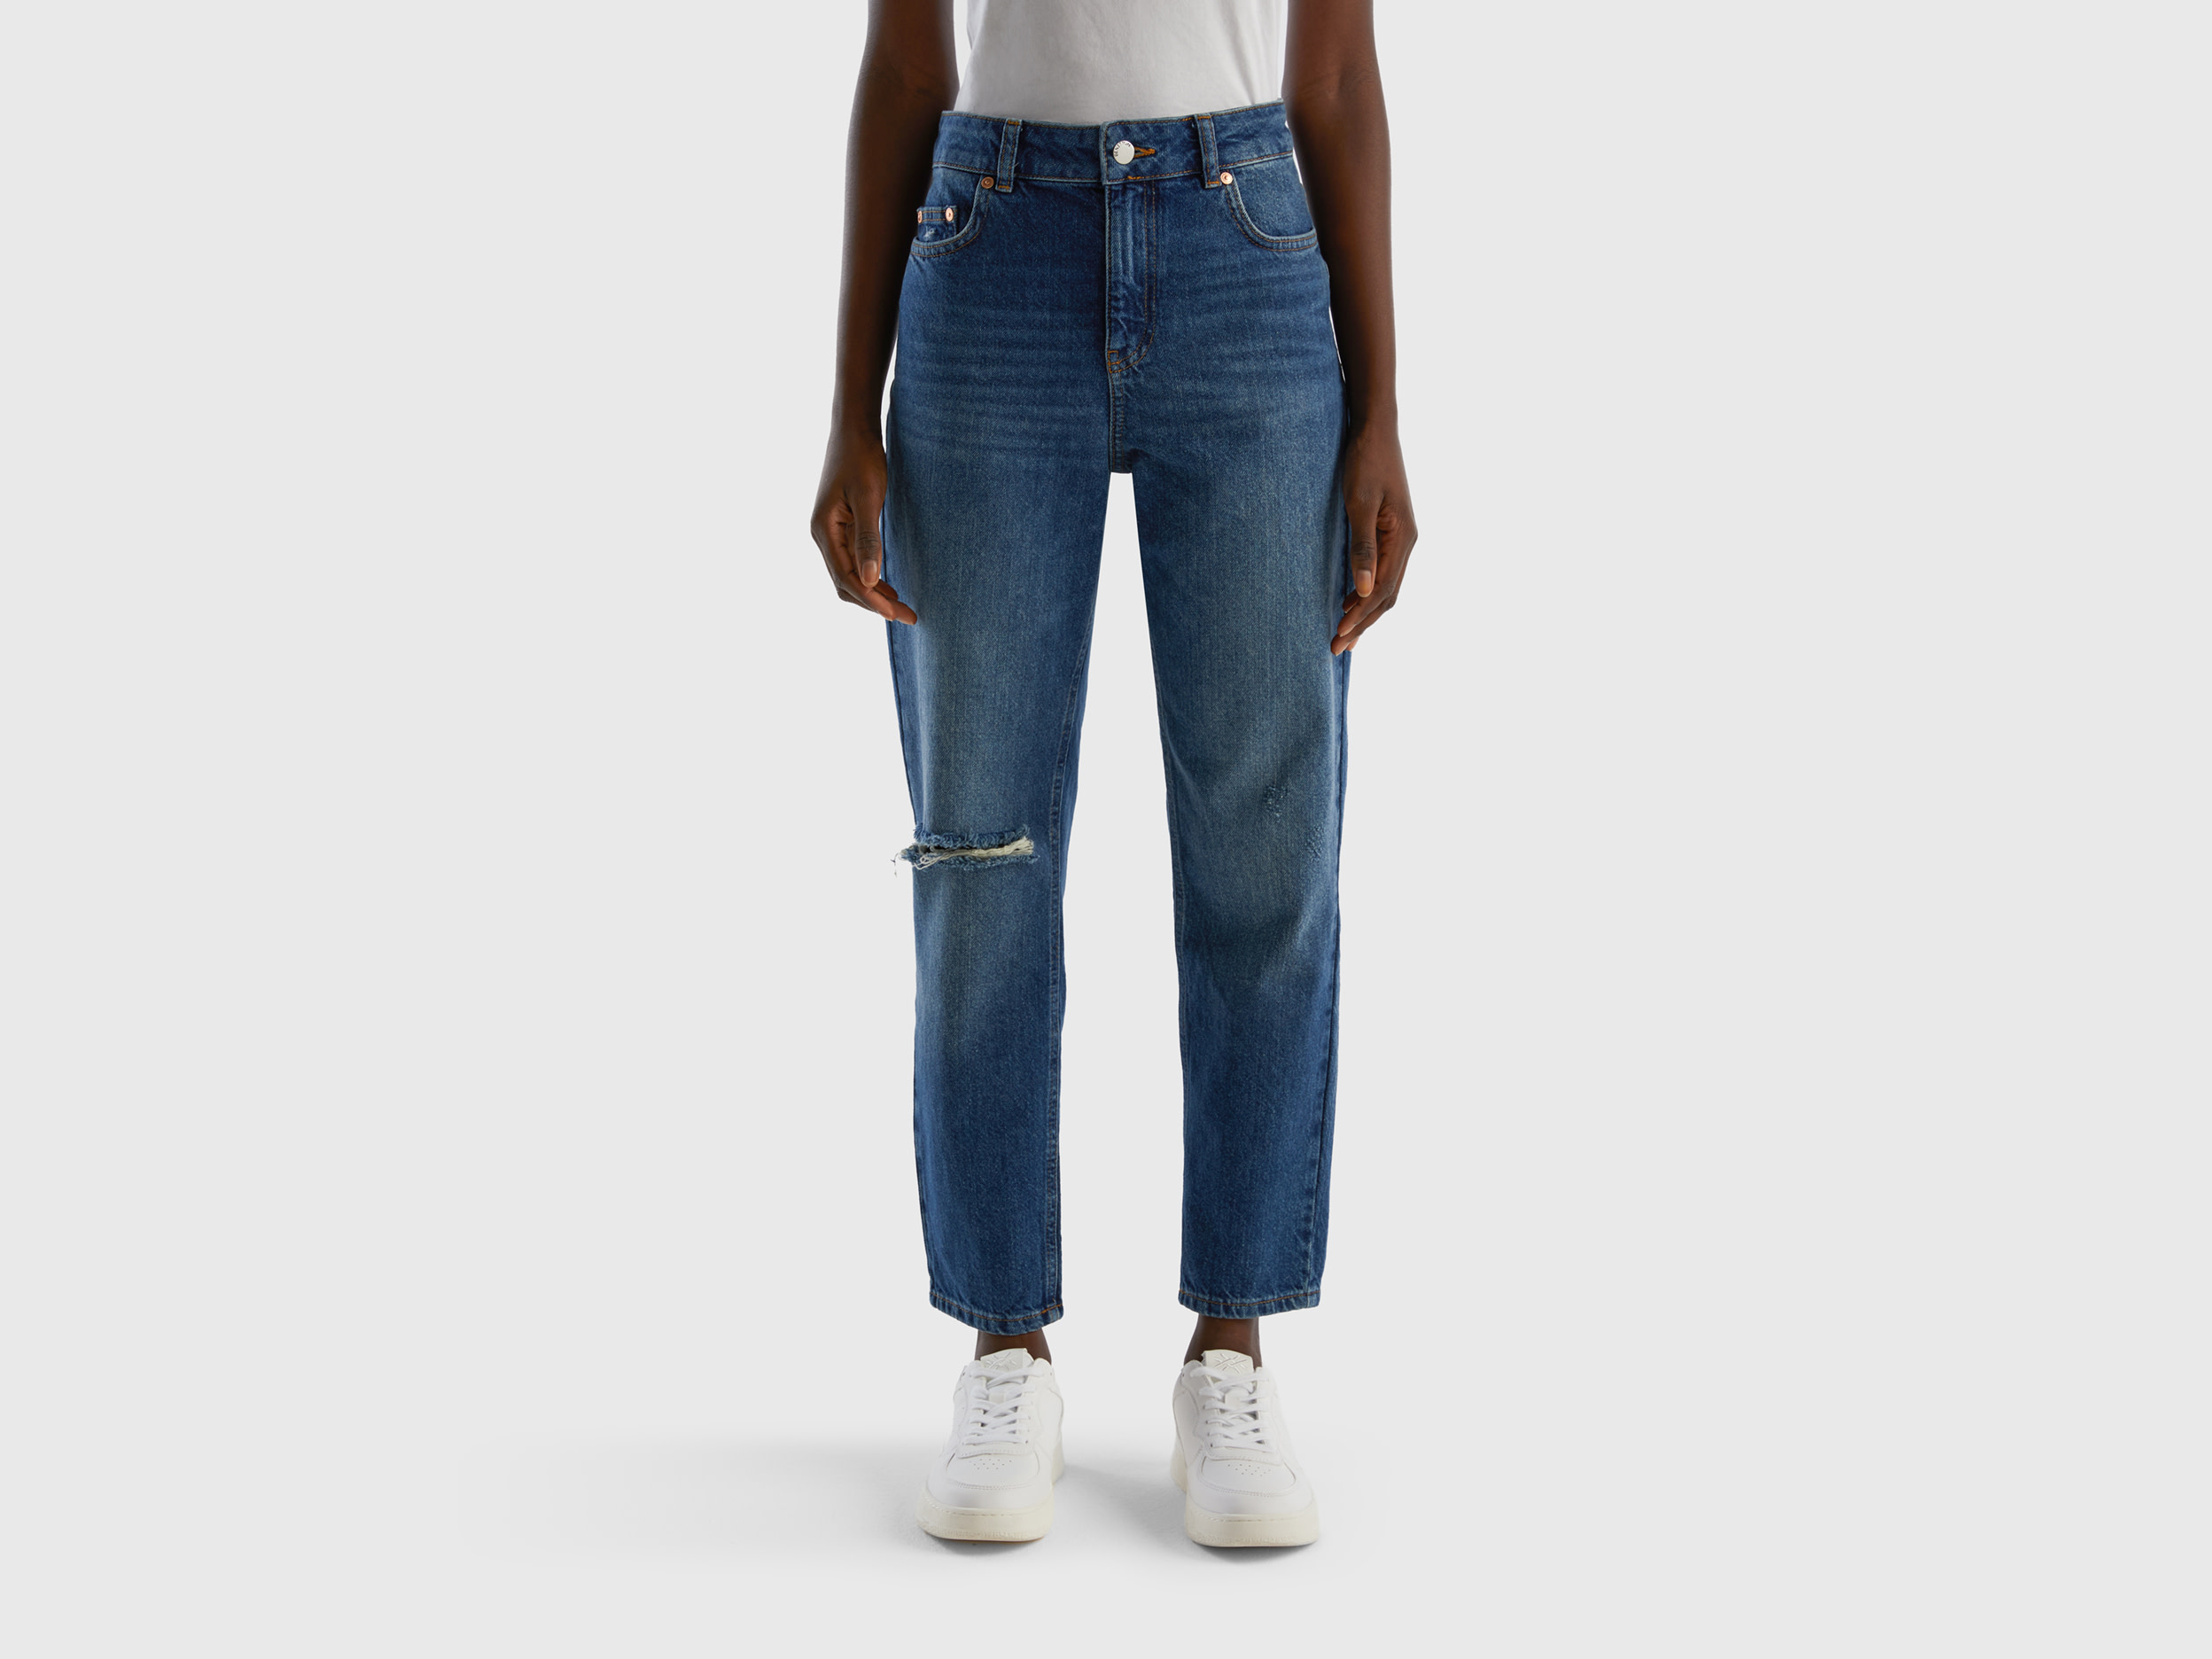 Benetton, Cropped High-waisted Jeans, size 33, Dark Blue, Women